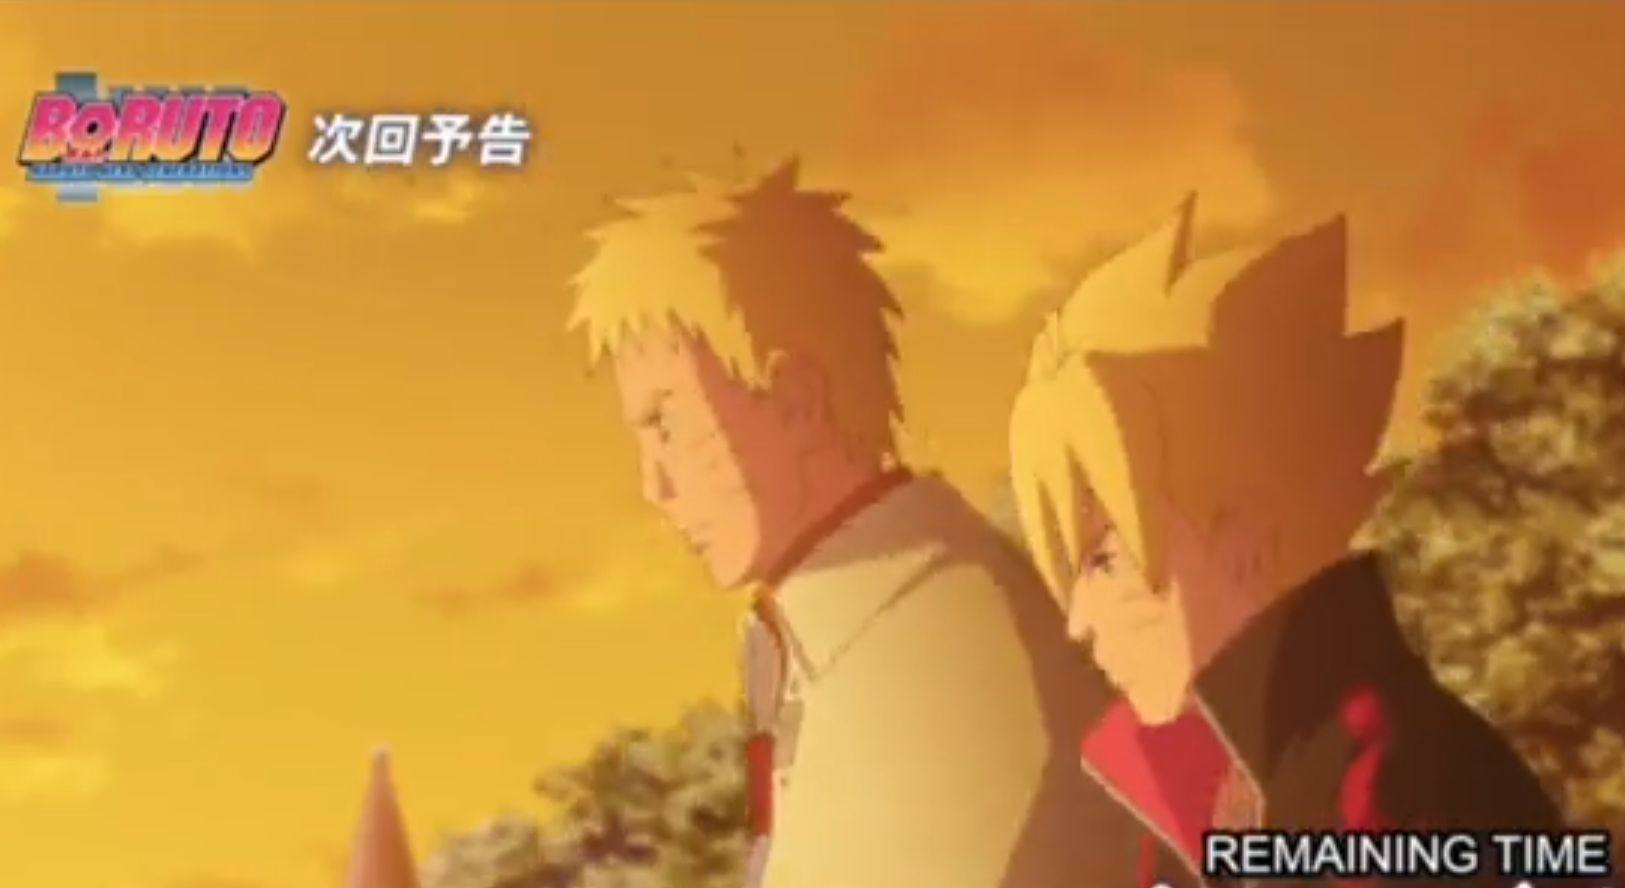 Segera Rilis Anime Boruto Naruto Next Generations Episode Berikut Spoiler Dan Jadwal